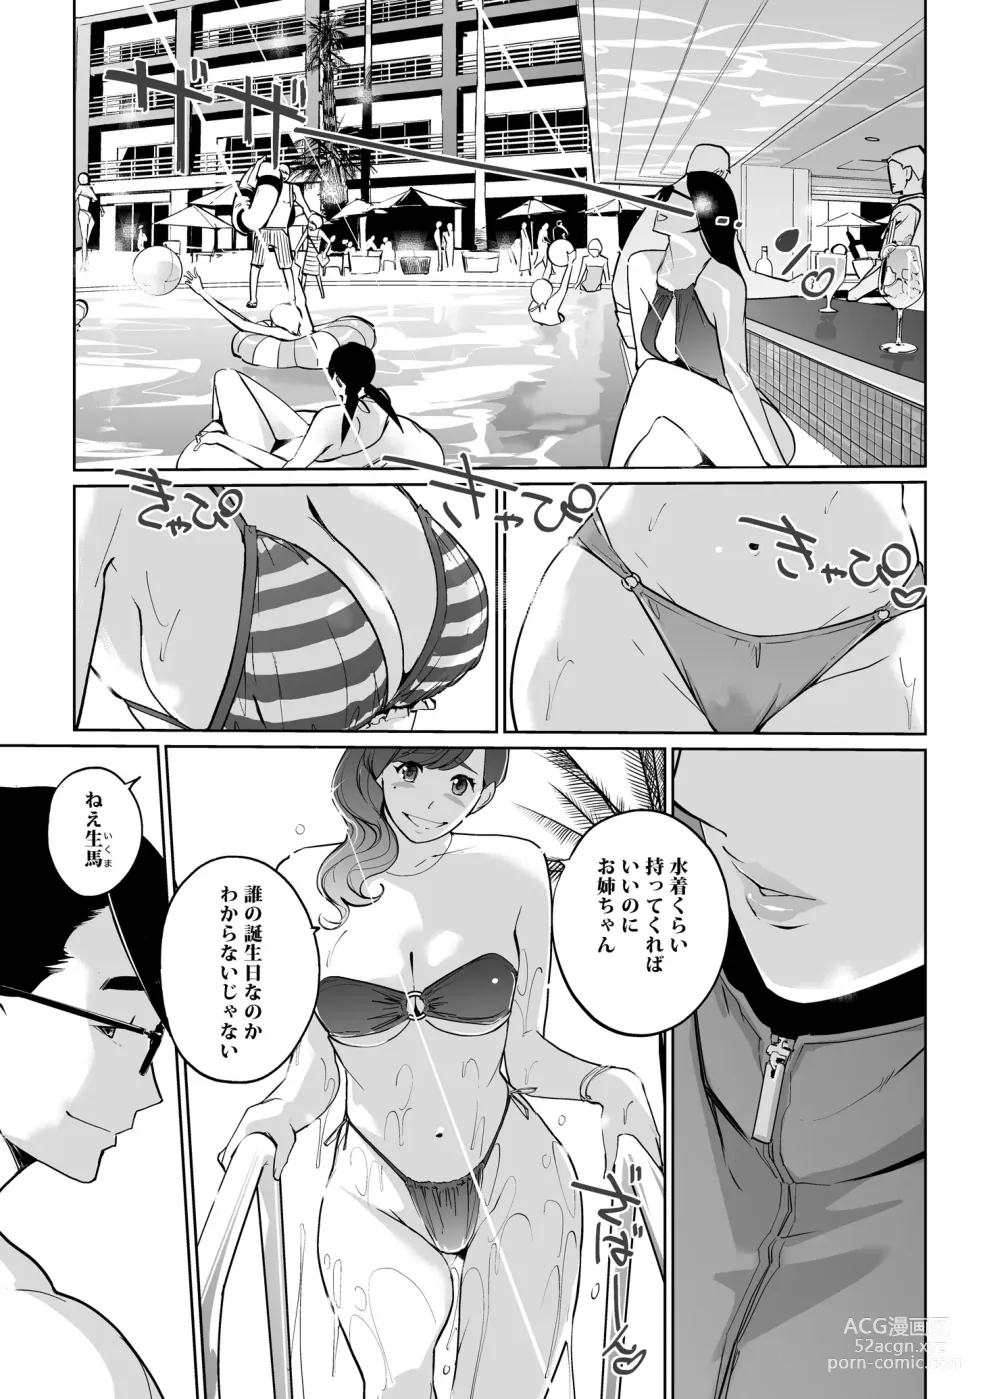 Page 3 of doujinshi NTR Midnight Pool Season 2 #1